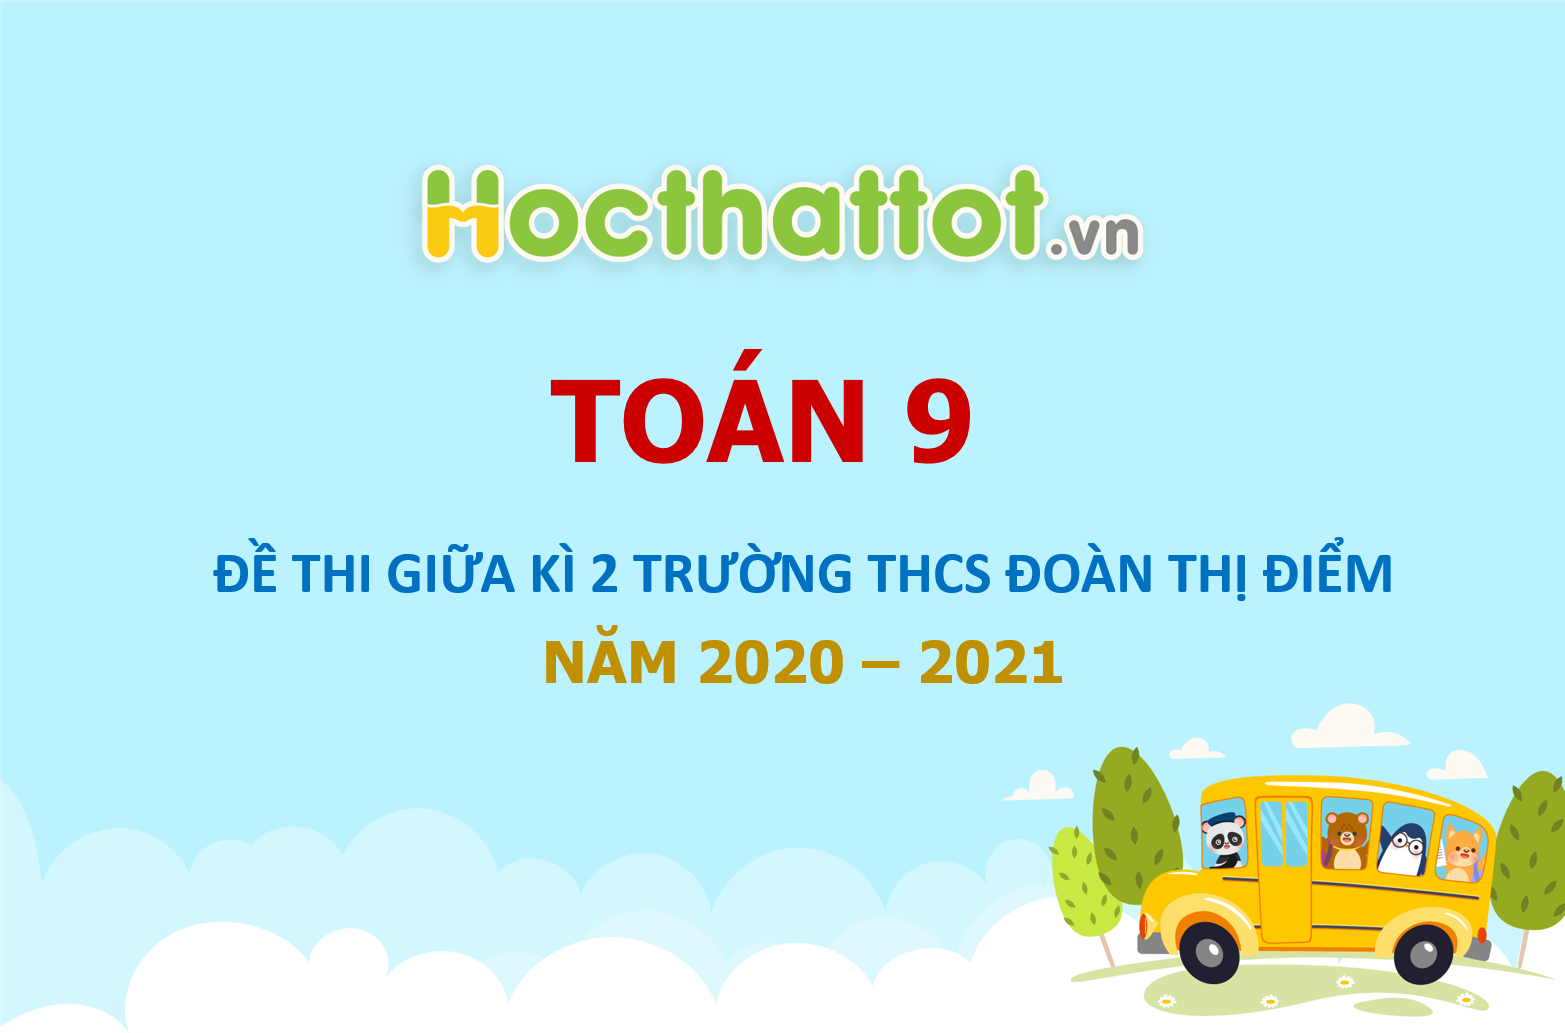 de-giua-ki-2-toan-9-nam-2020-2021-truong-thcs-doan-thi-diem-ha-noi